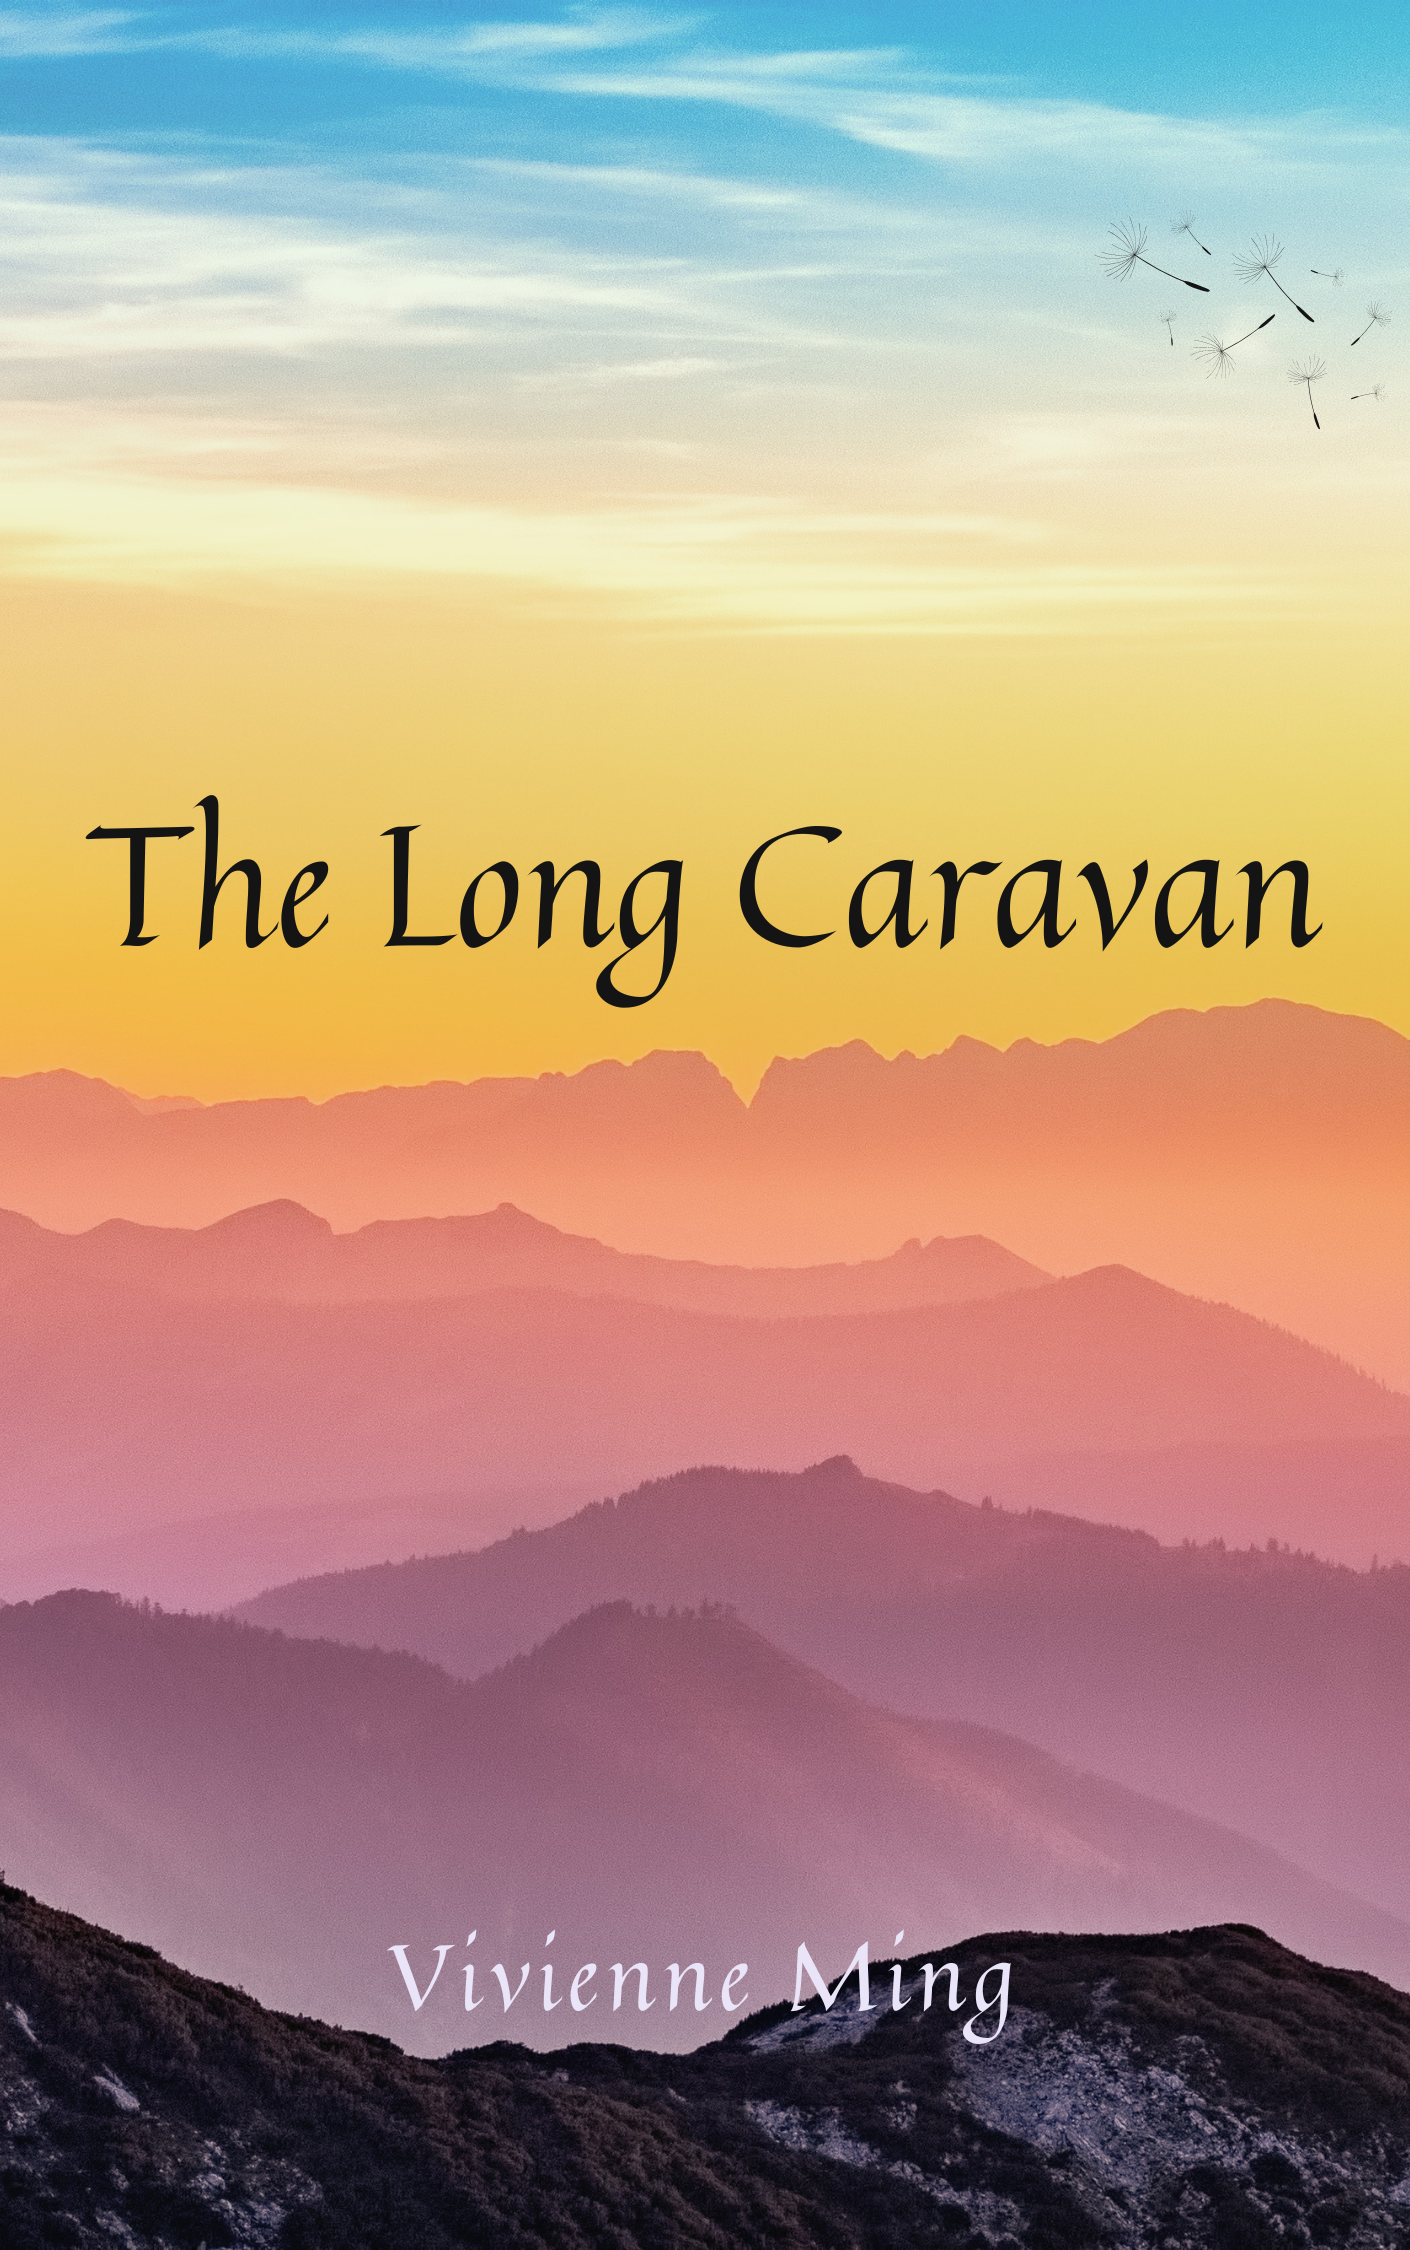 The Long Caravan